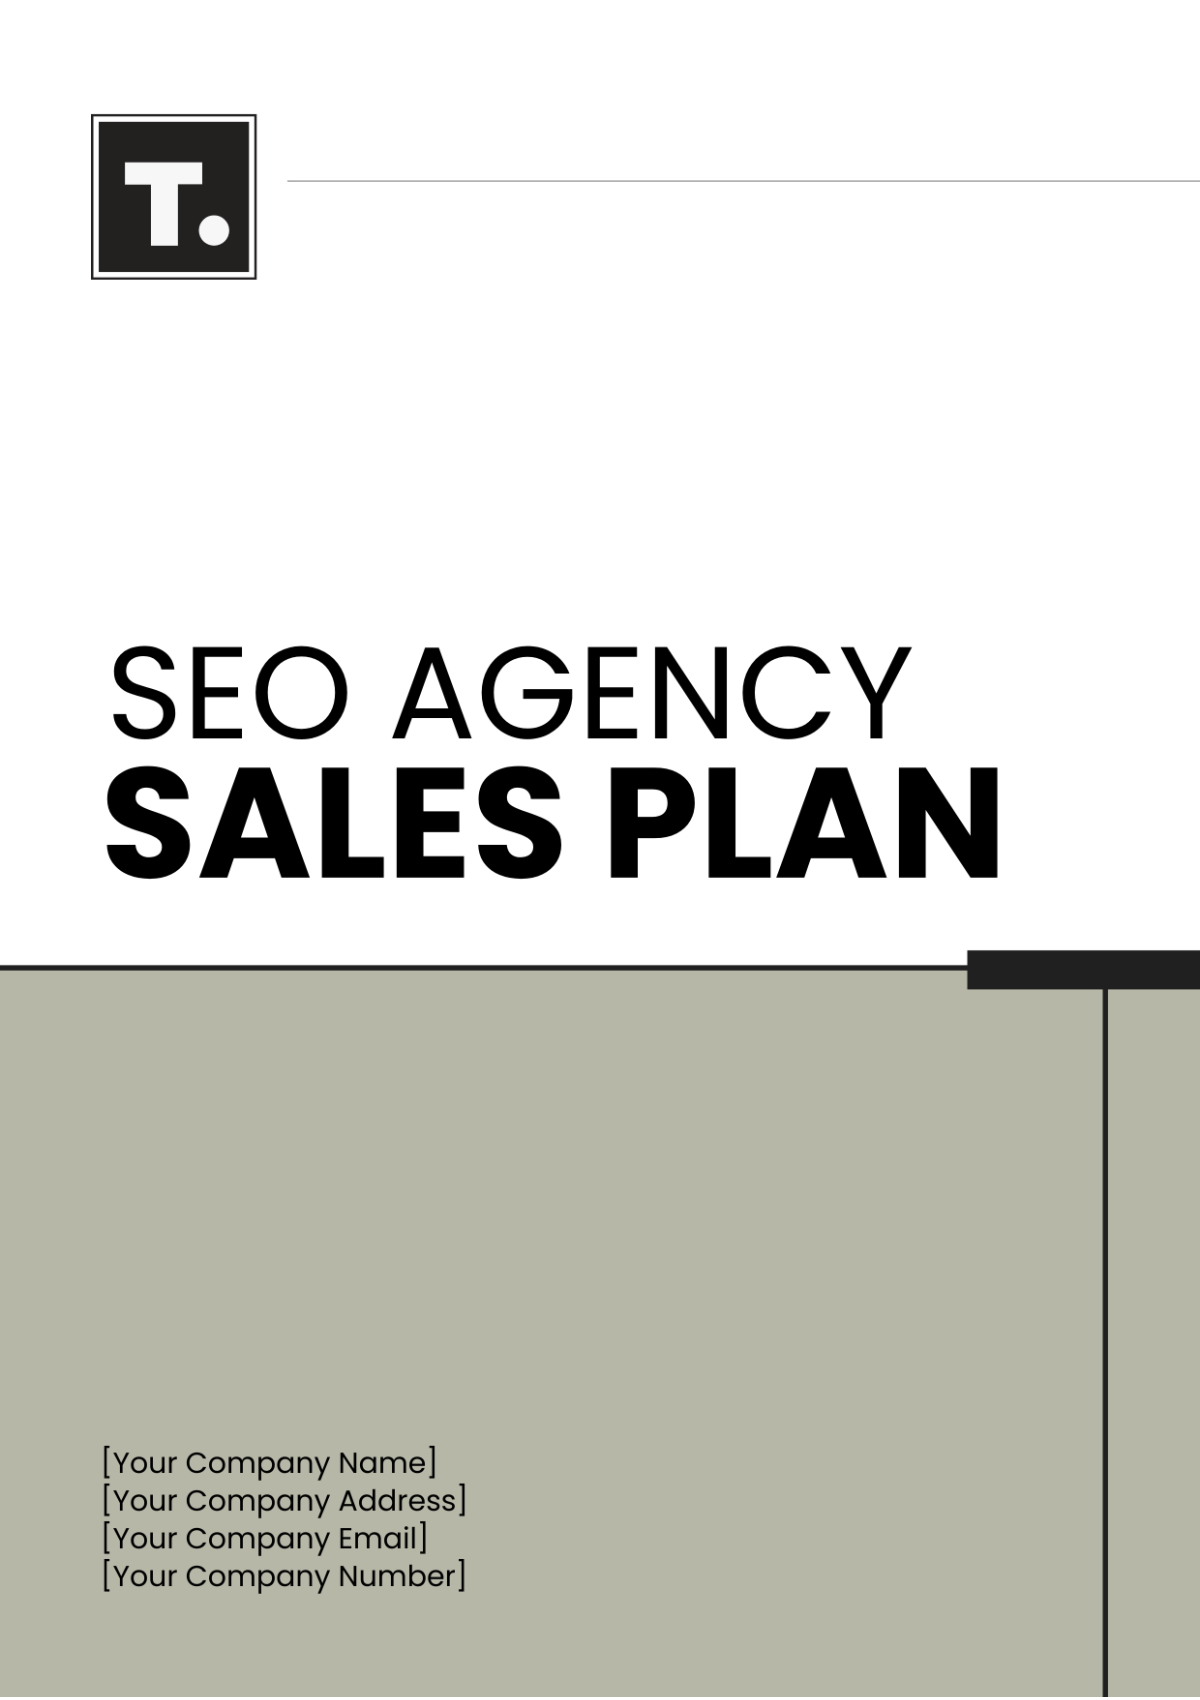 Free SEO Agency Sales Plan Template